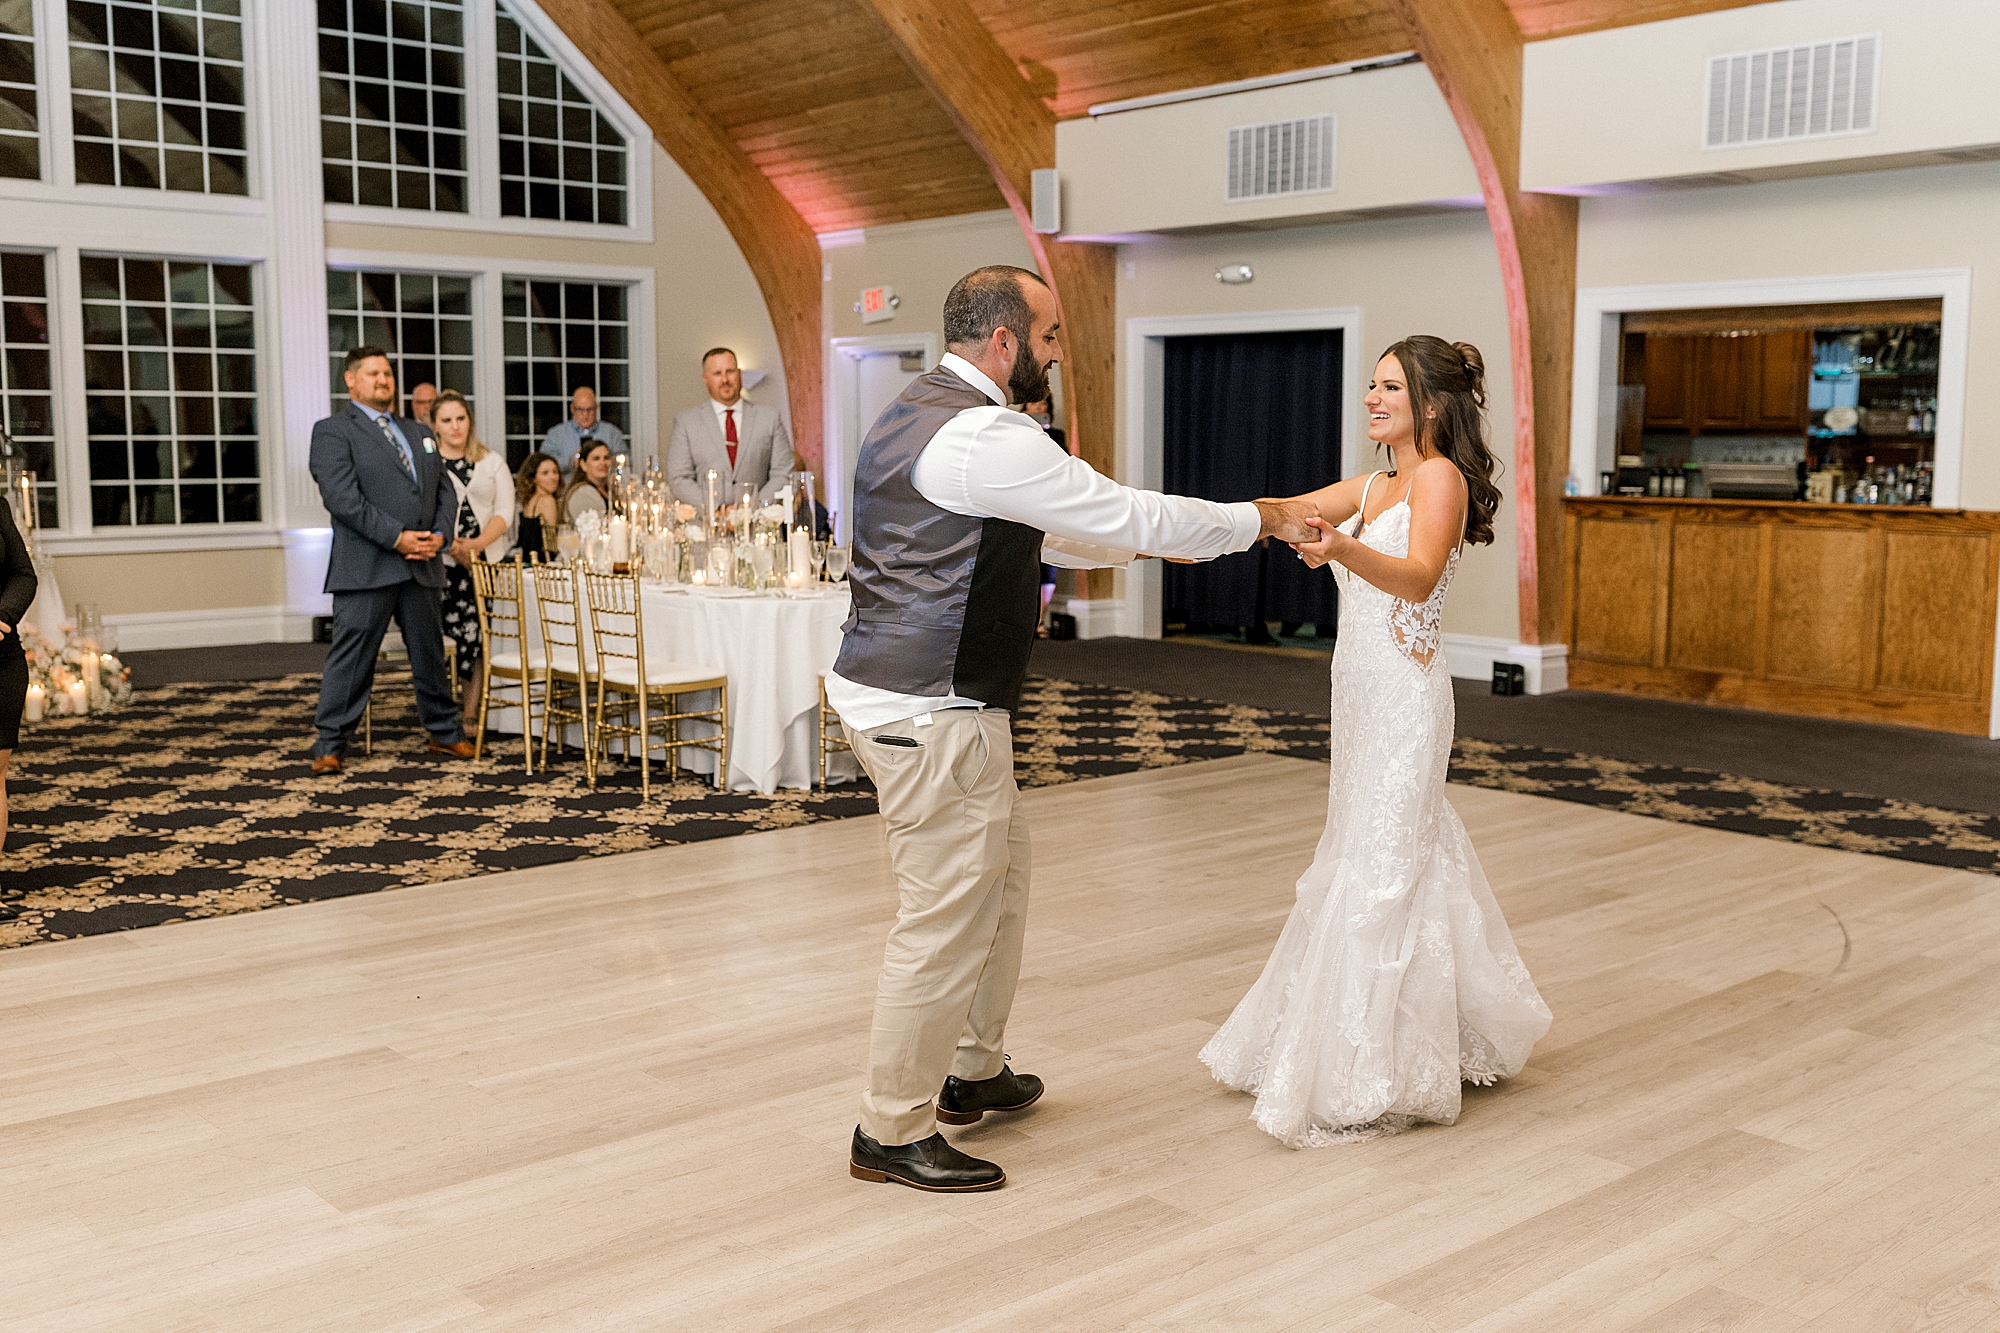 newlyweds dance together during LBI wedding reception